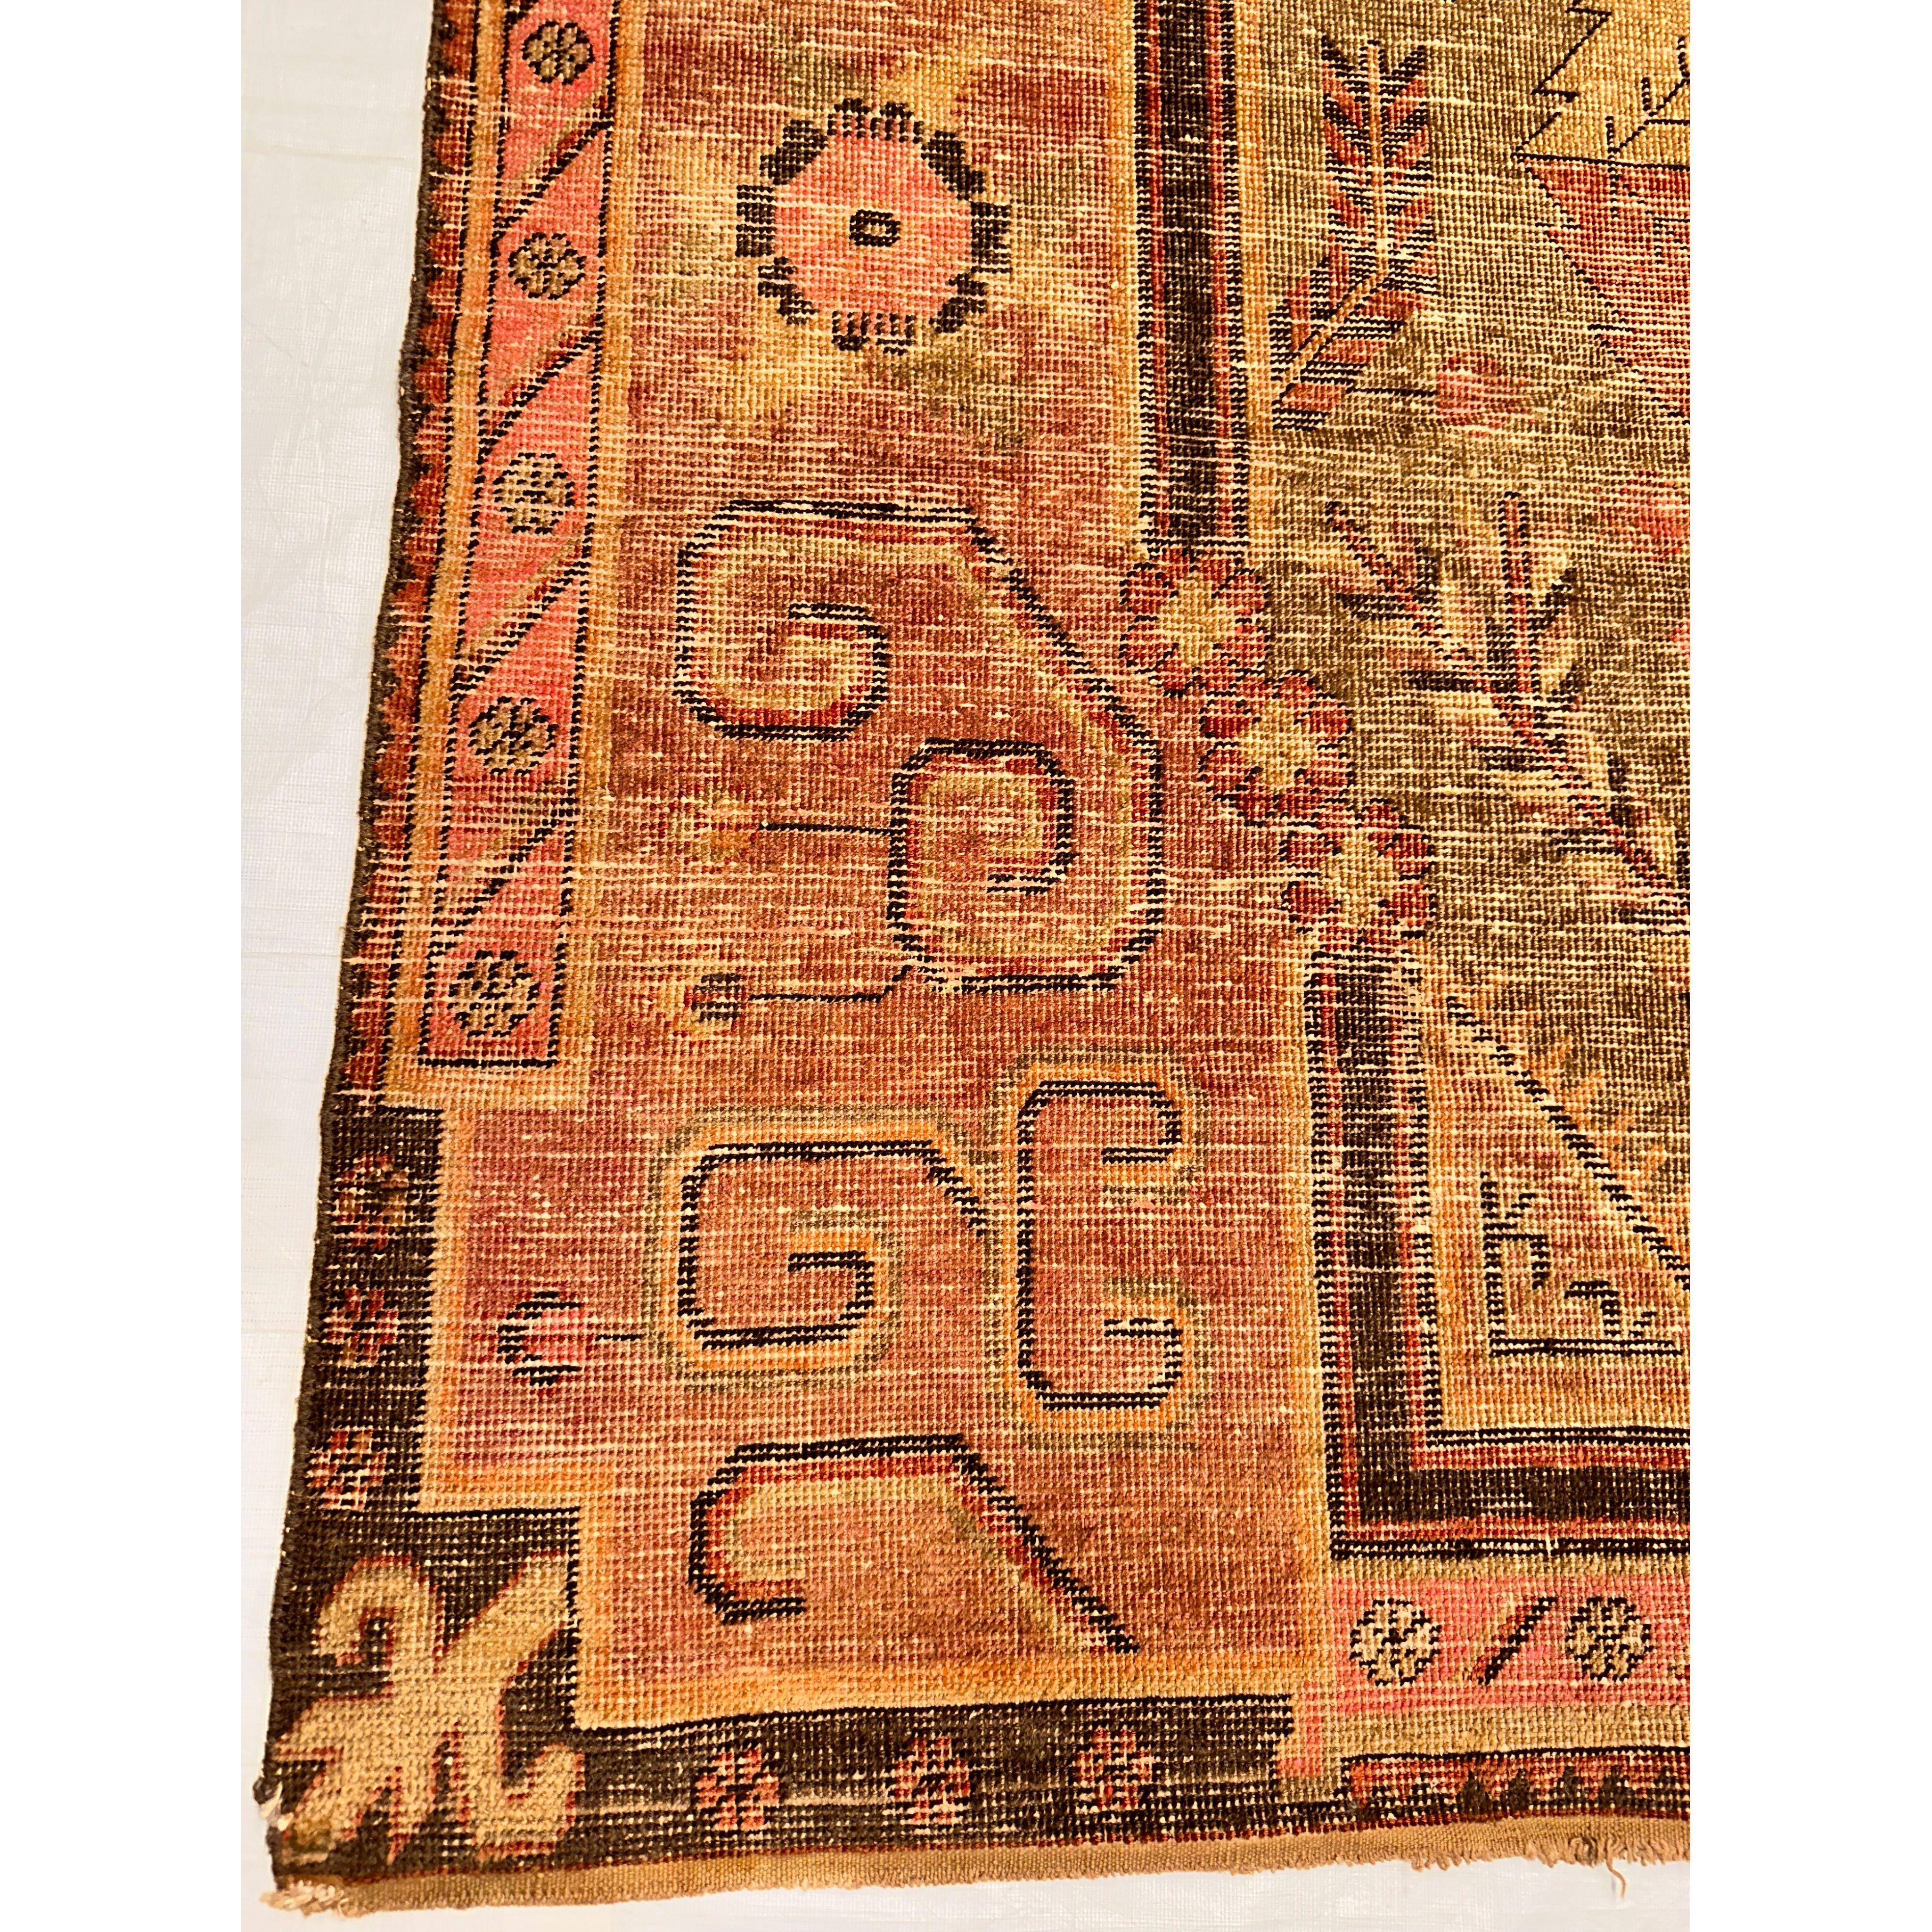 Other Late-19th Century Khotan Samarkand Rug For Sale